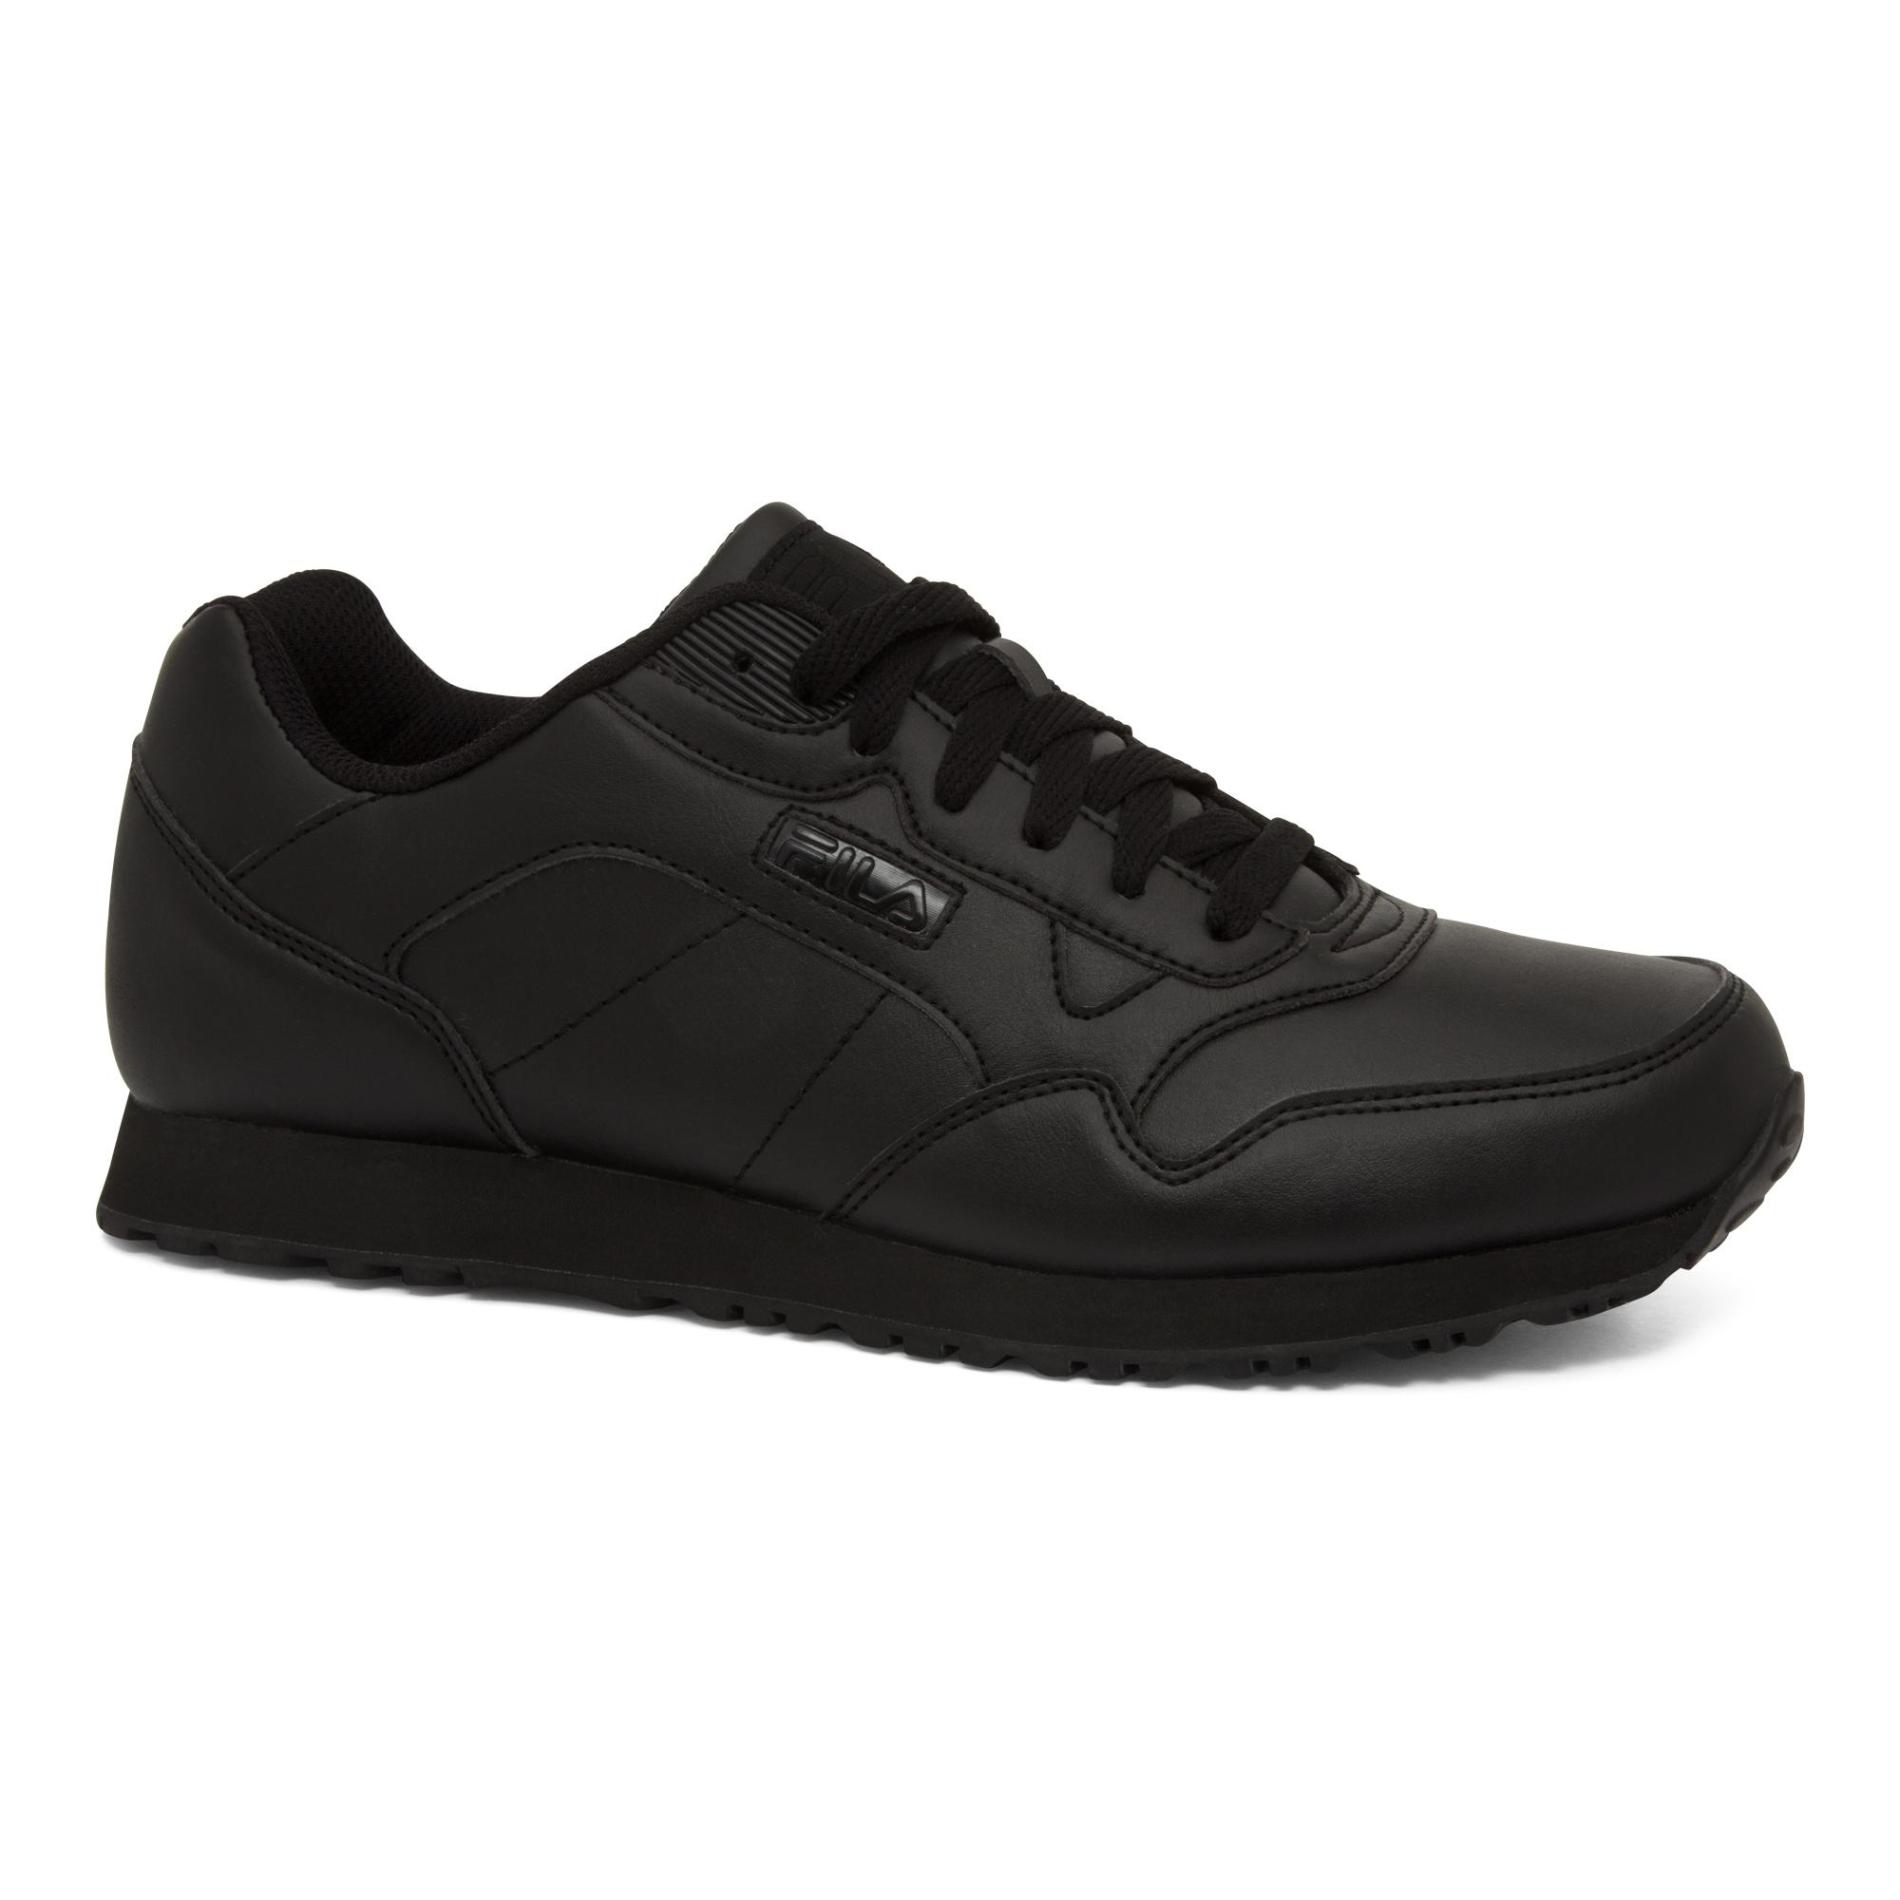 Fila Men's Cress Athletic Shoe Black